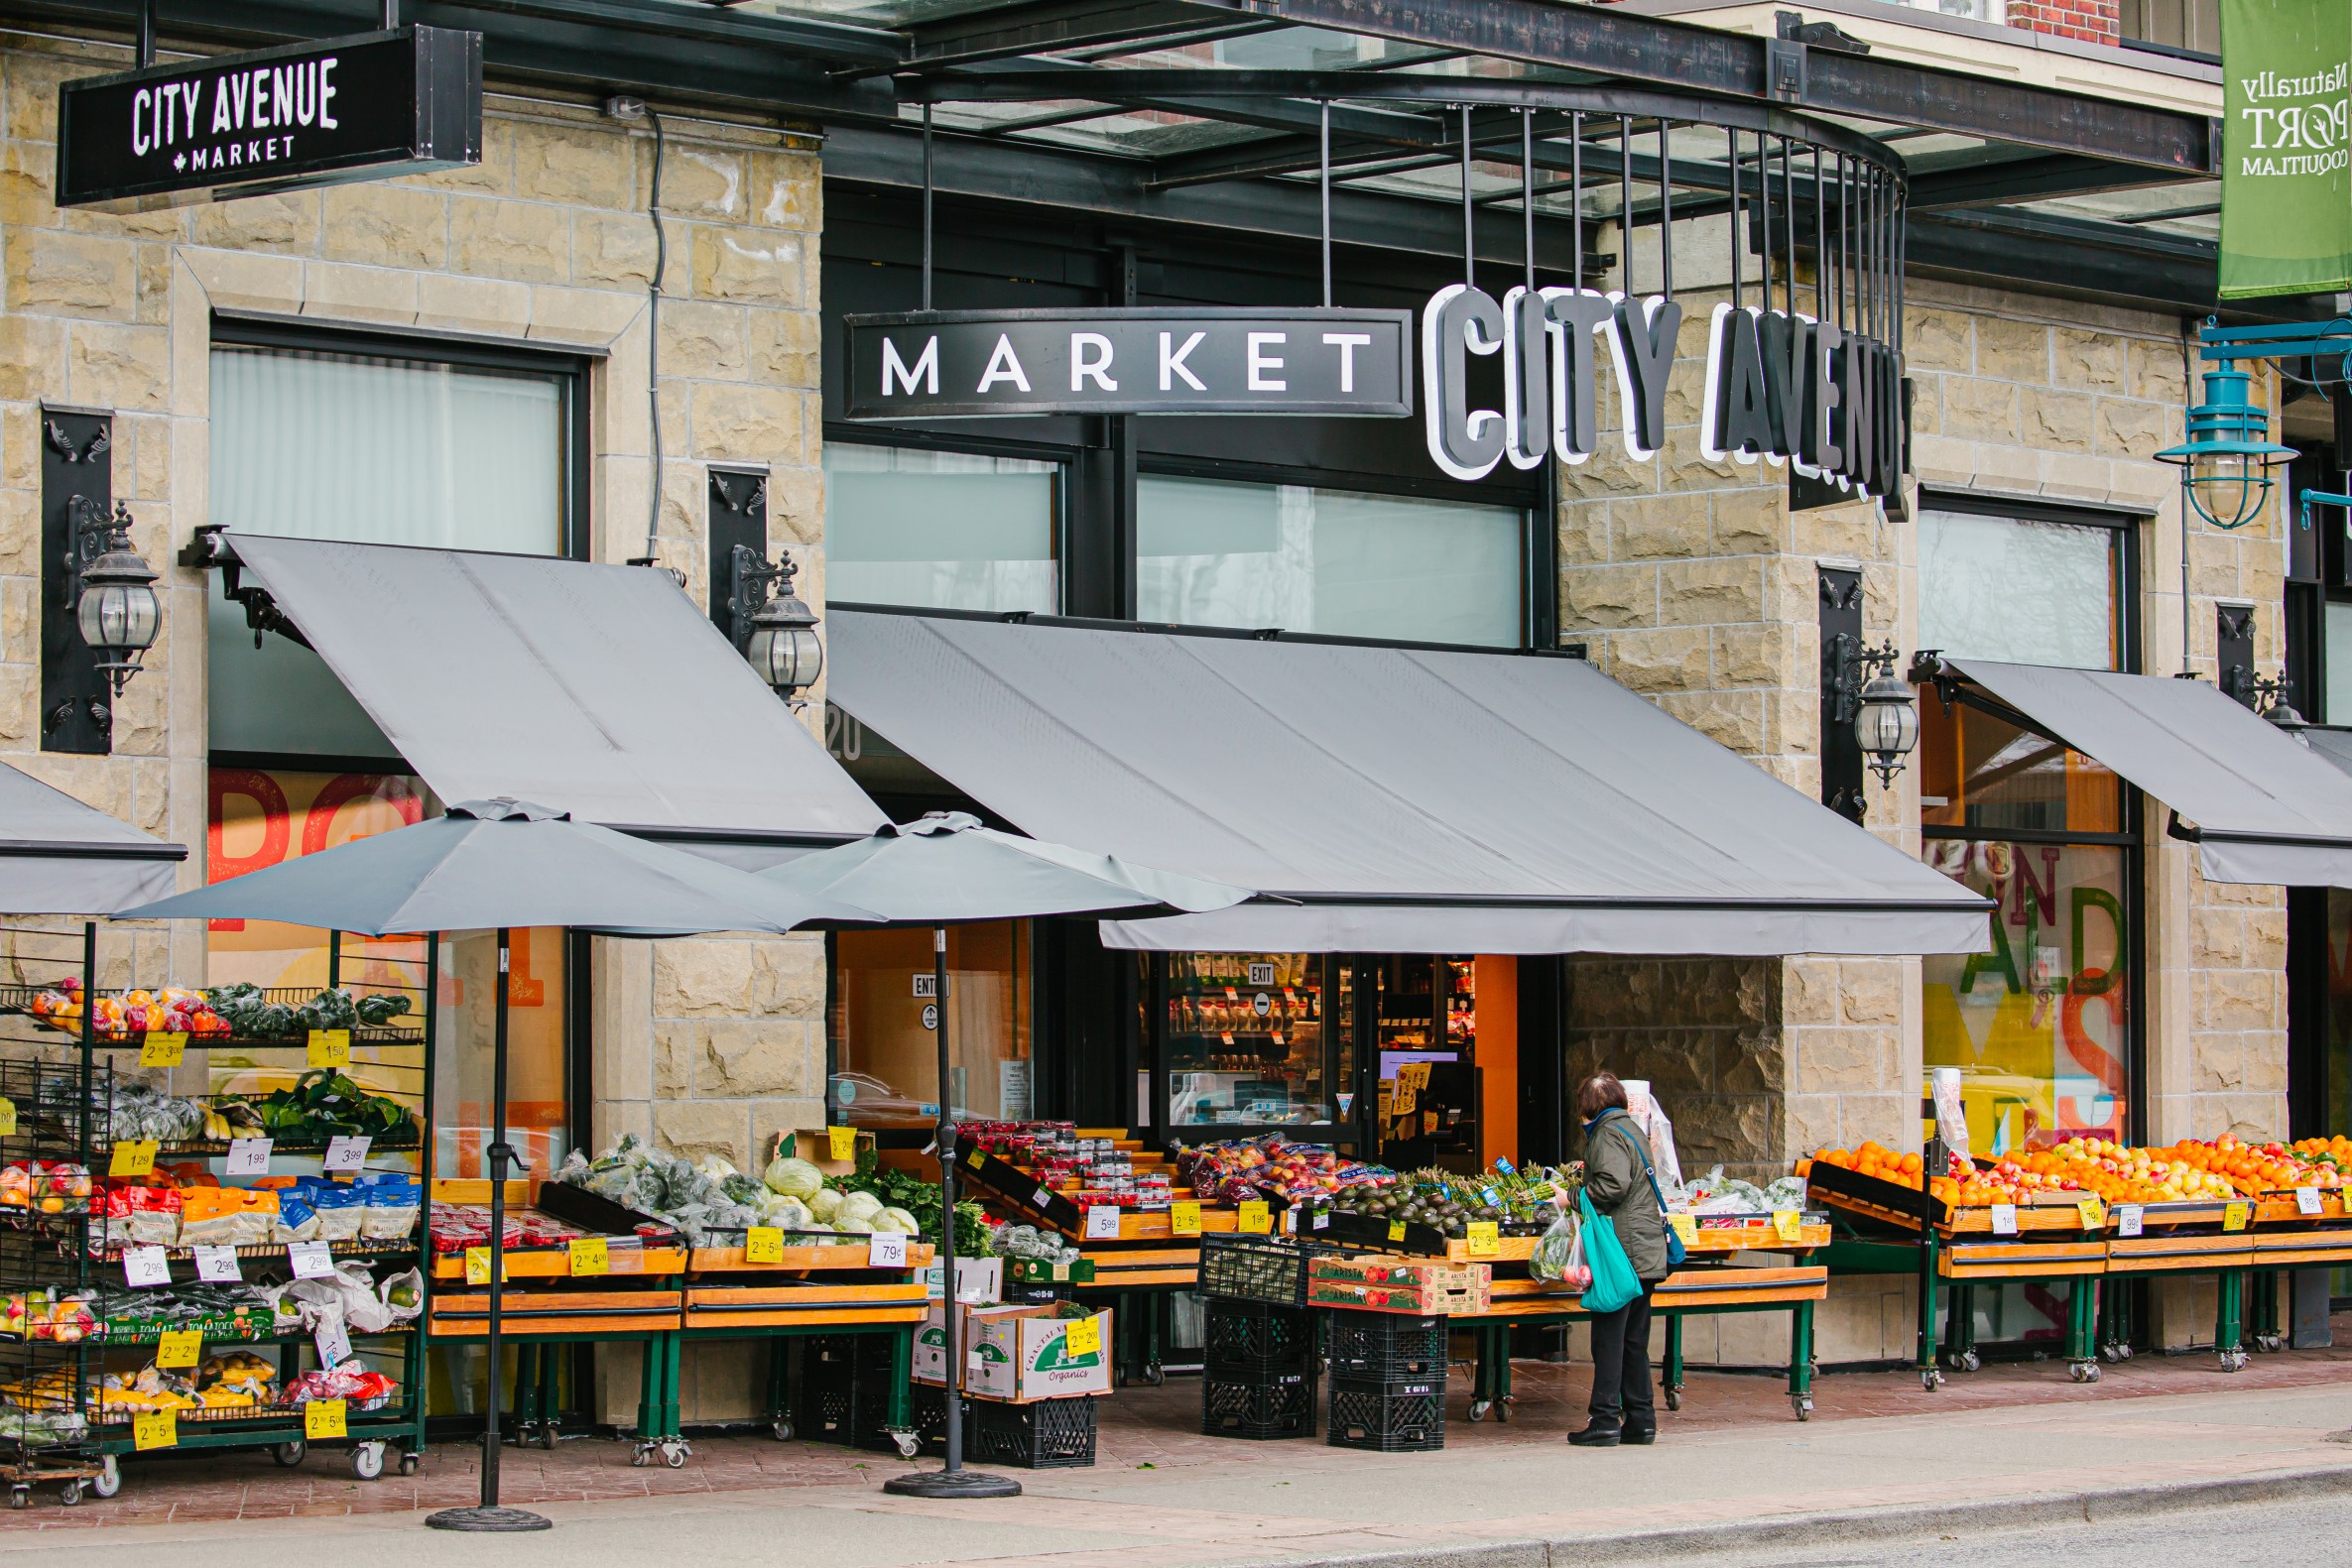 City Avenue Market – Brand Identity & Website